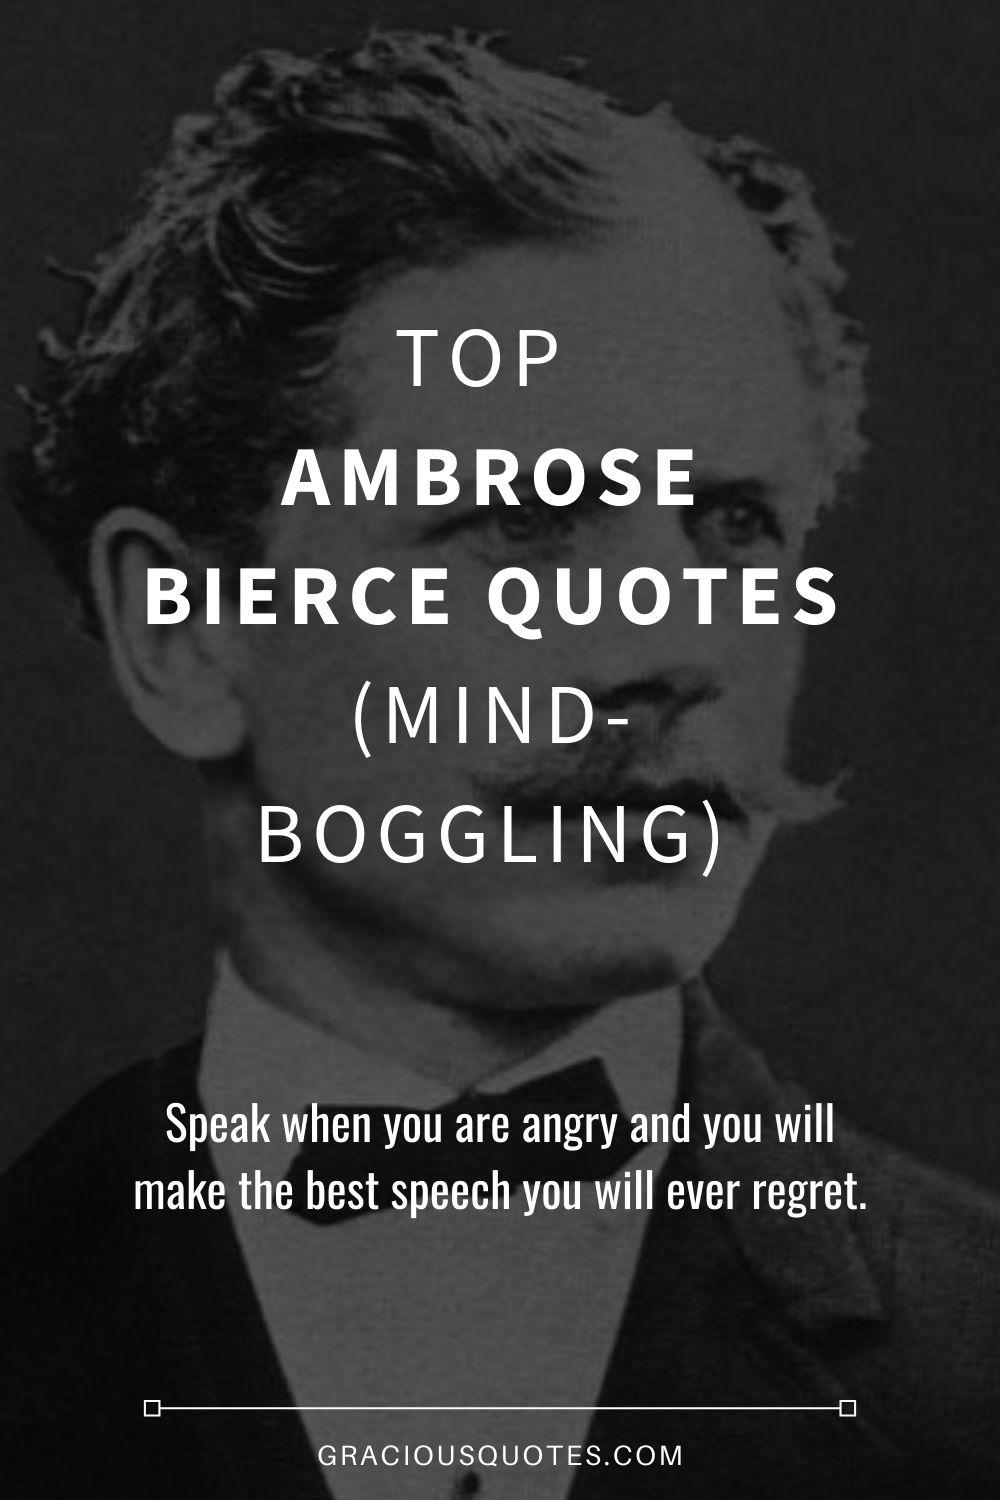 Top Ambrose Bierce Quotes (MIND-BOGGLING) - Gracious Quotes